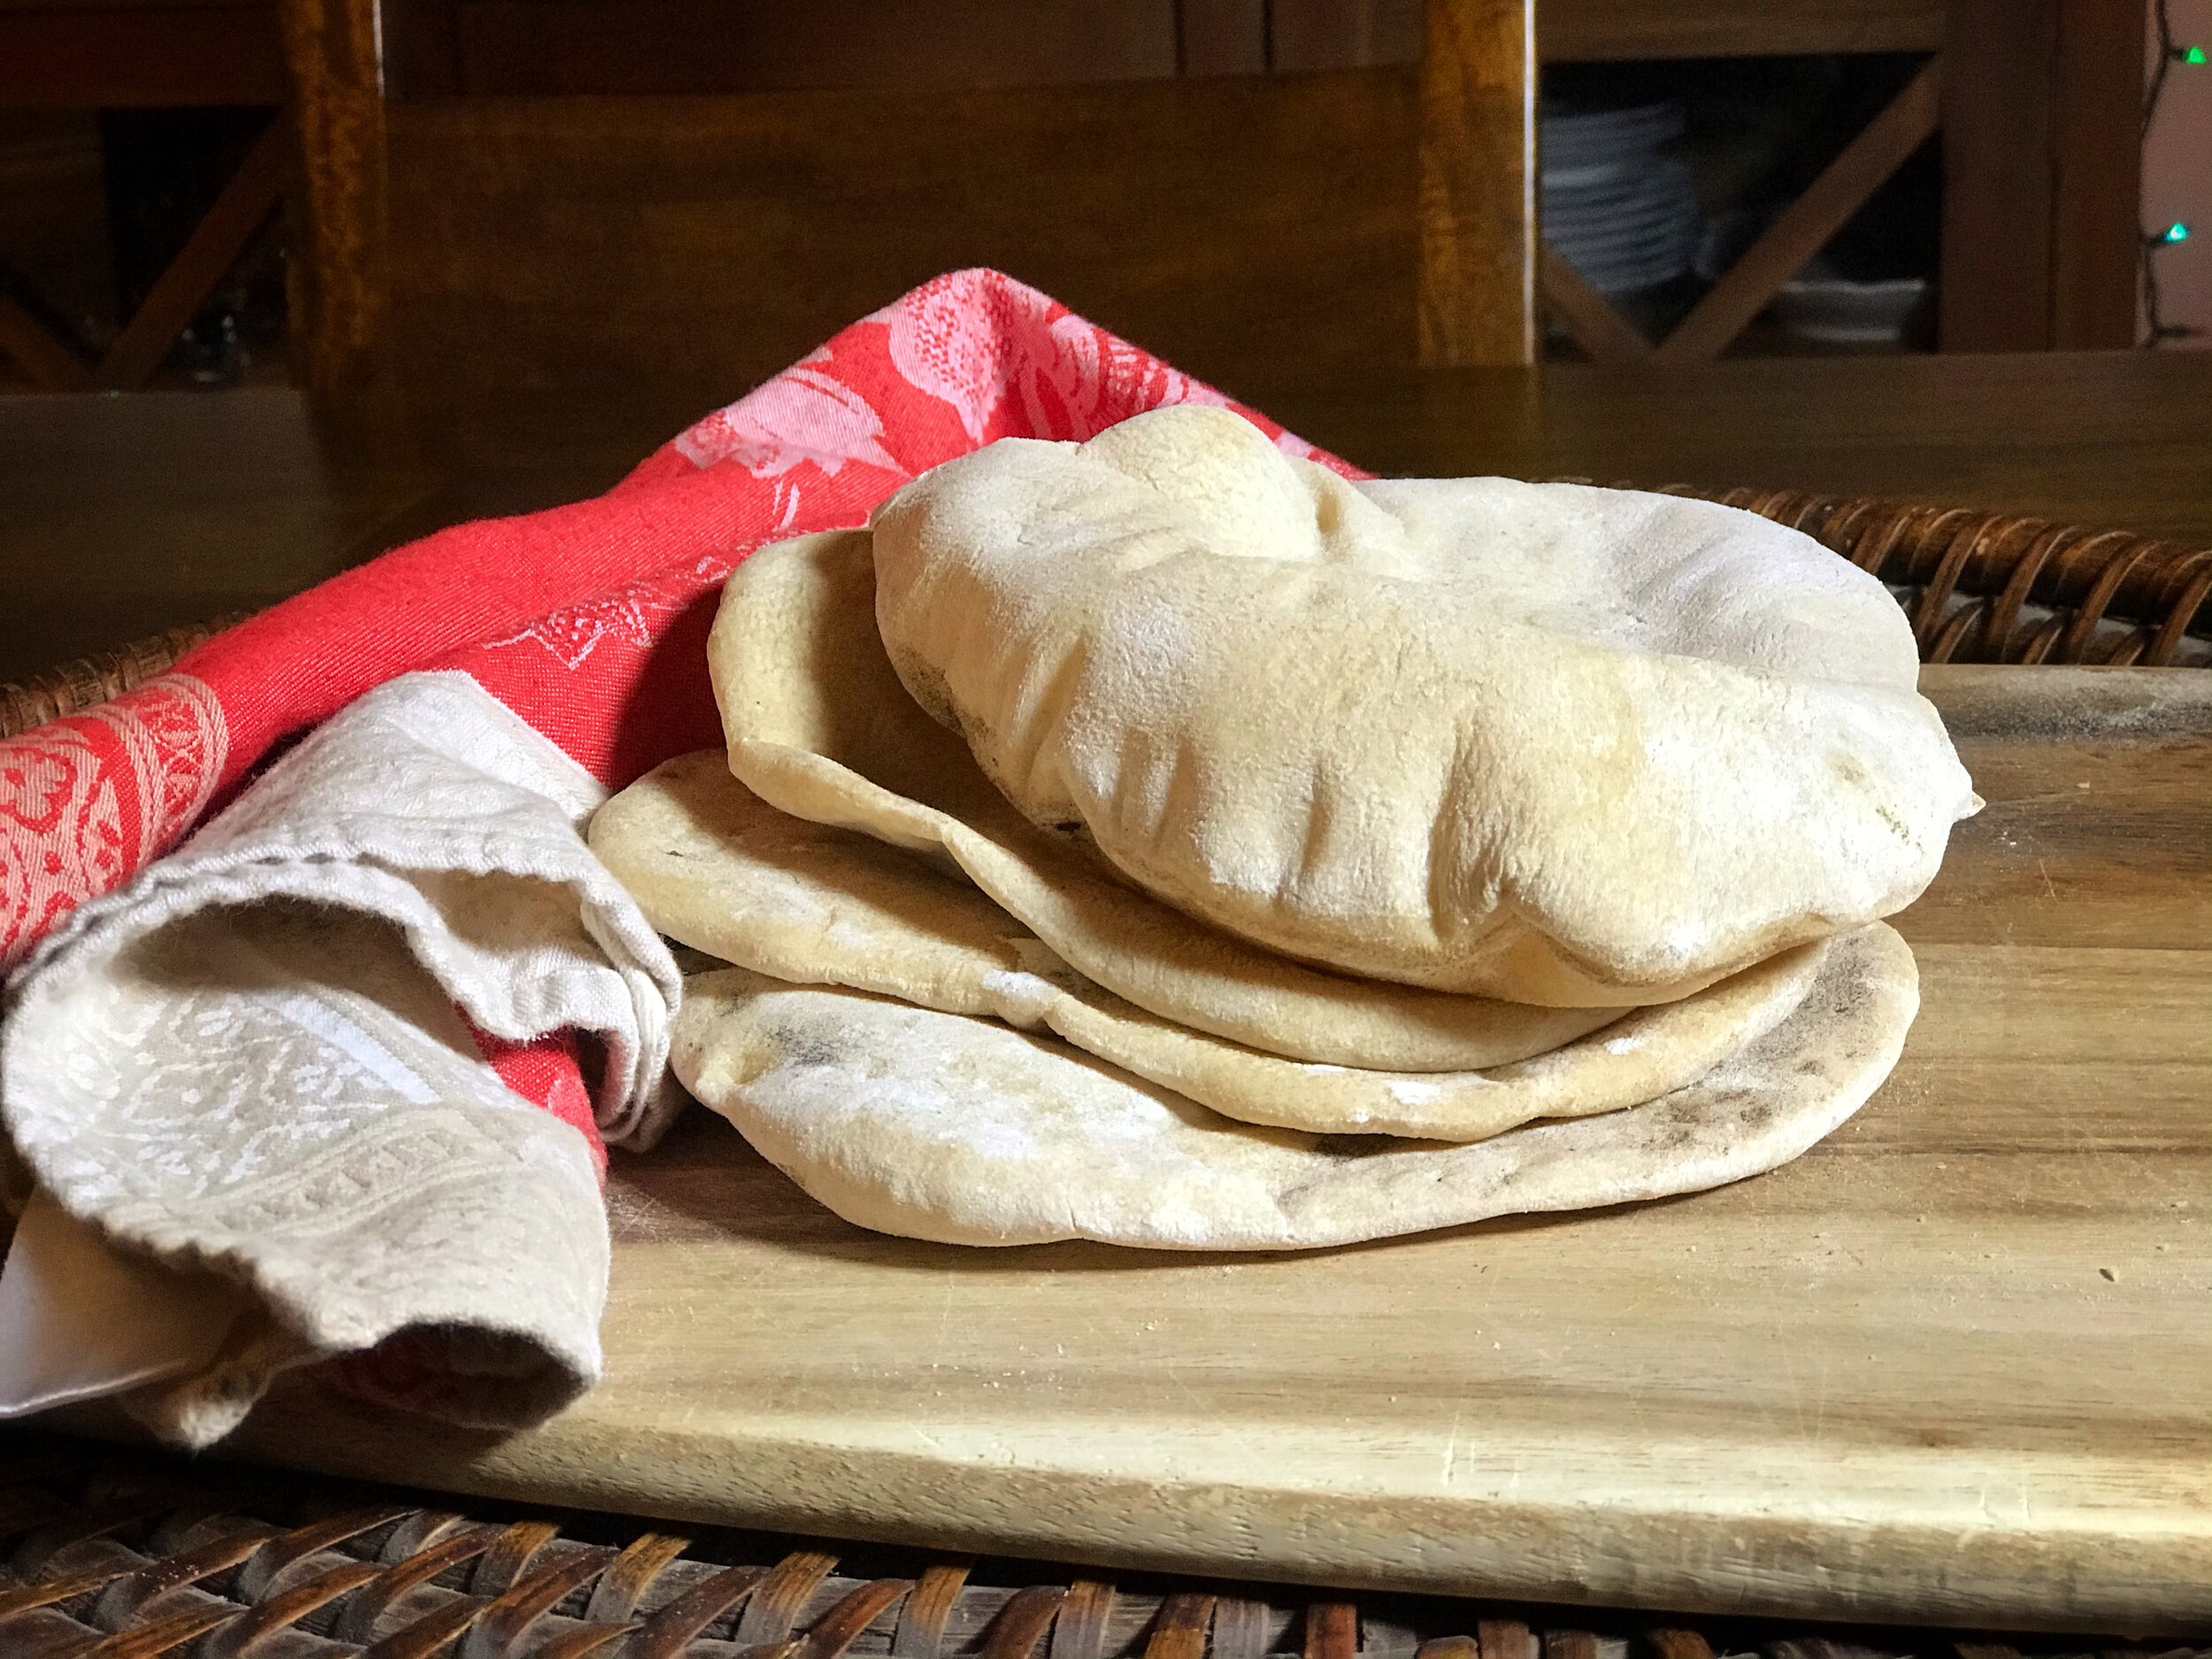 Oven baked Pita Bread